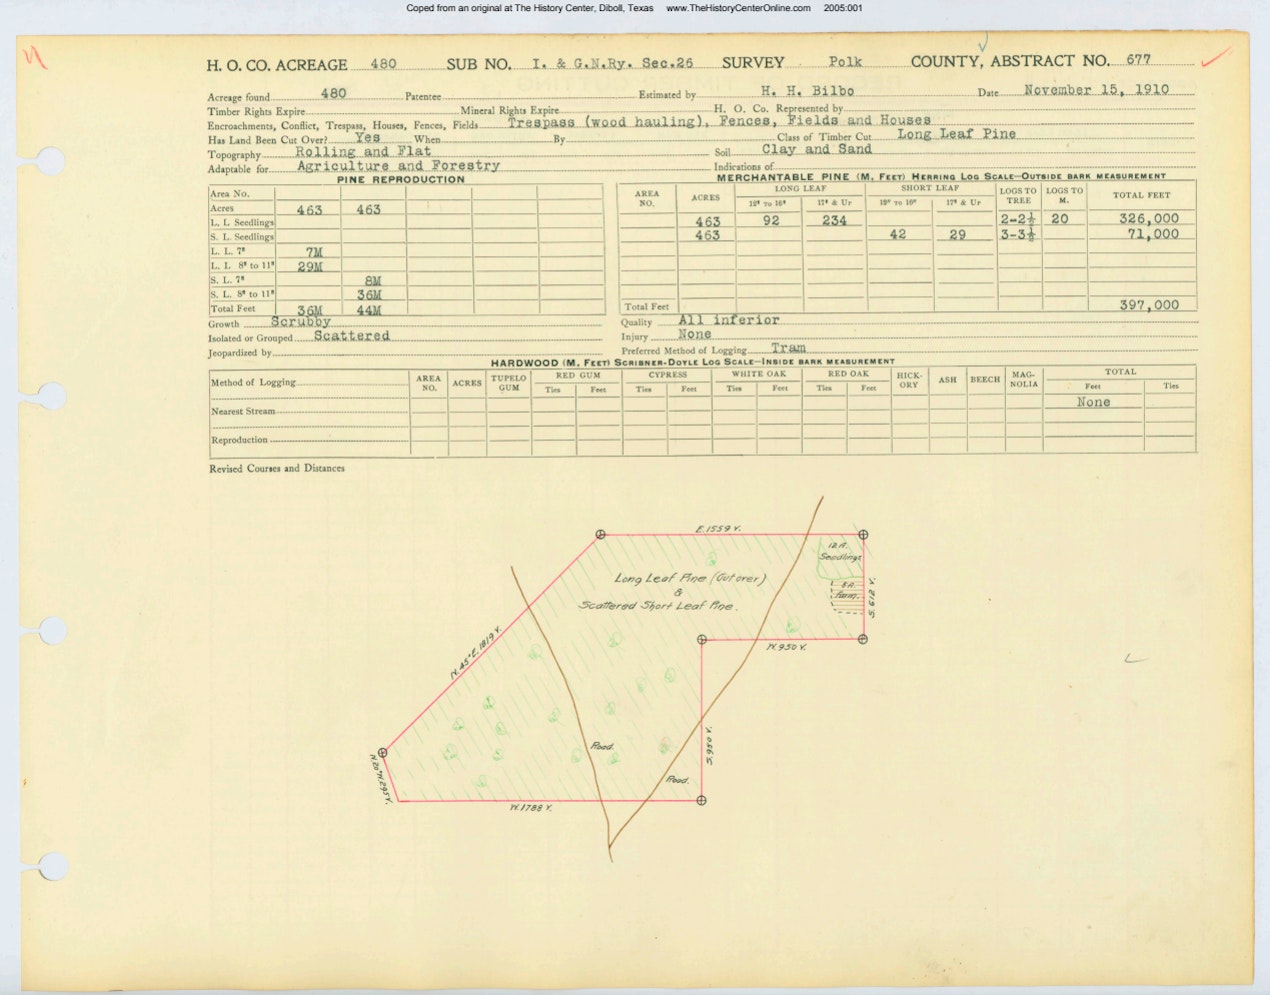 0015 Abstract 677, I.G.N. Railway Company Survey, Polk County